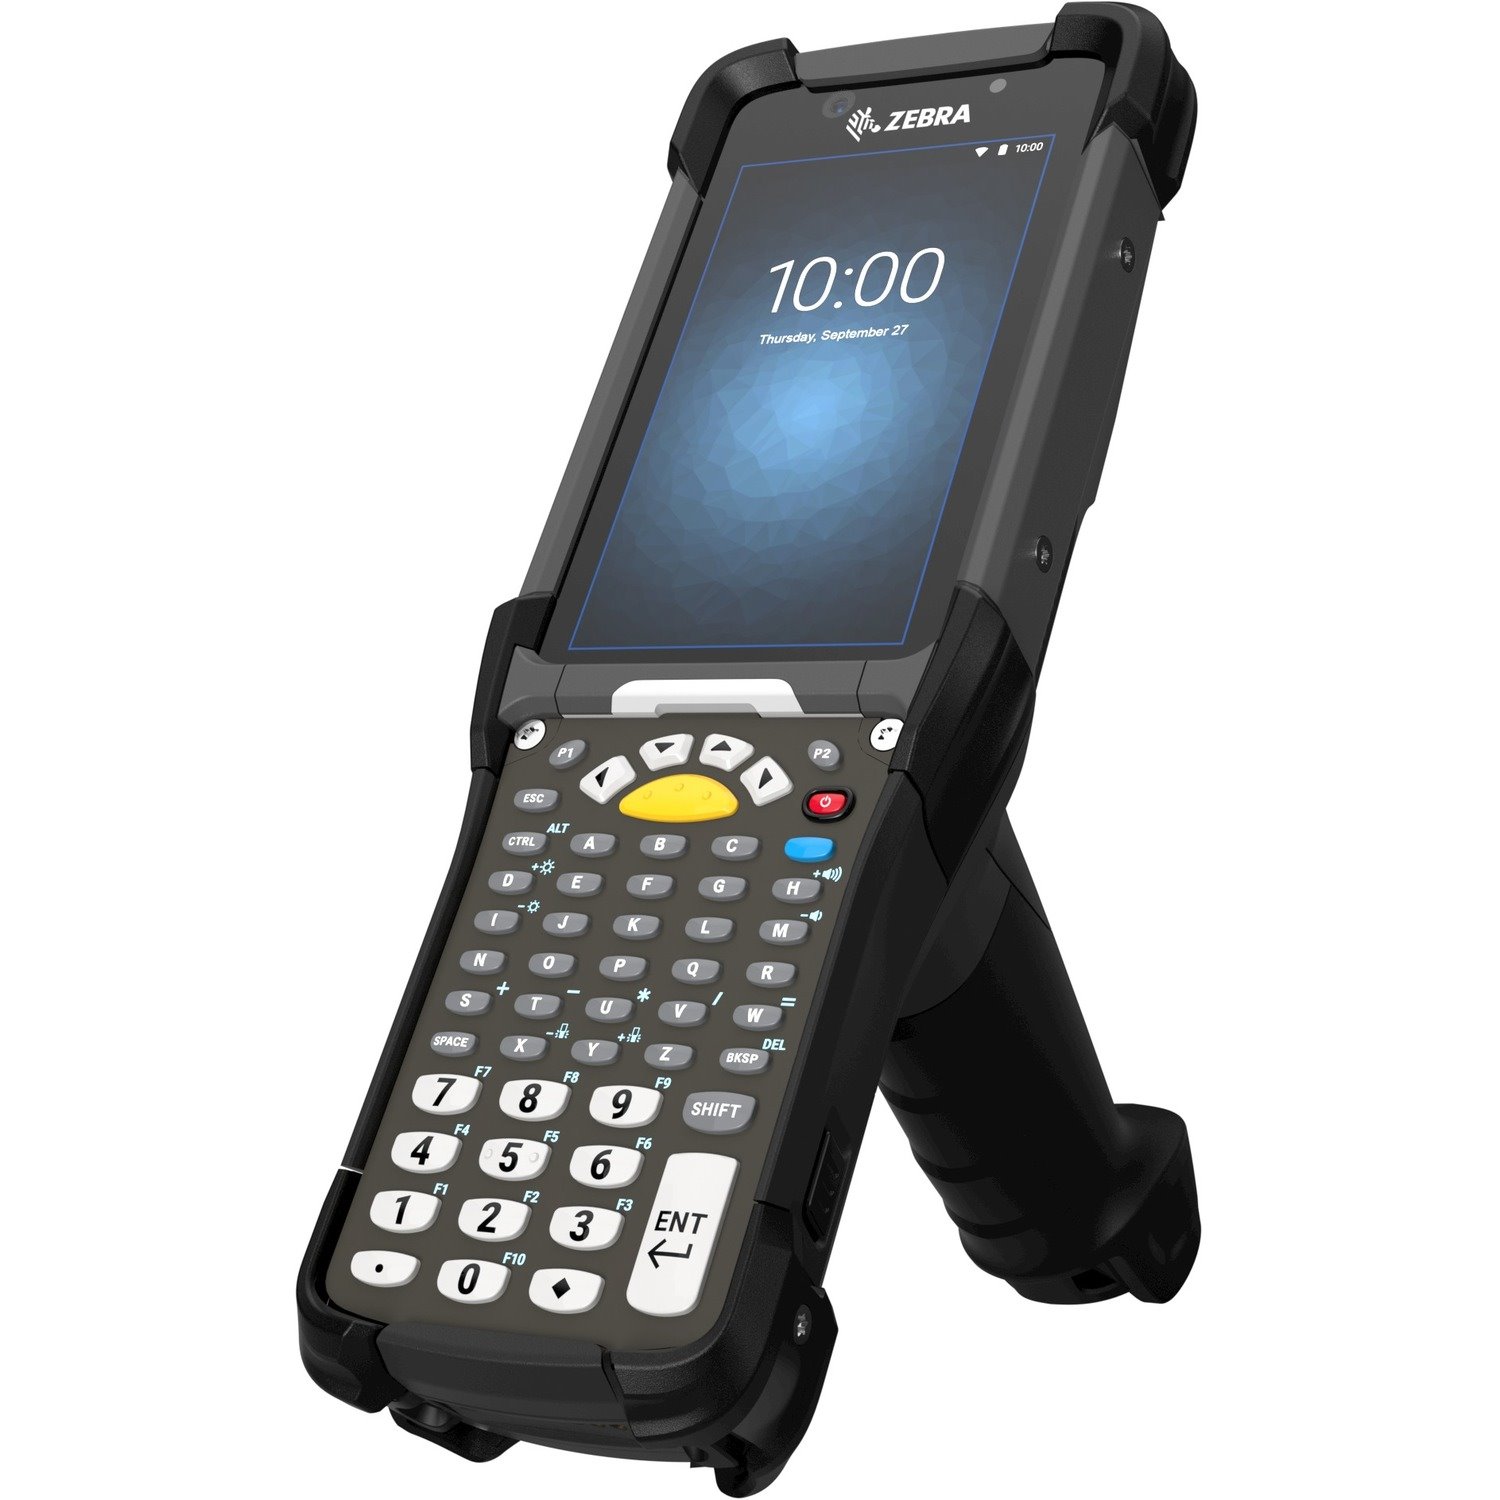 Zebra MC9300 Rugged Handheld Terminal - 1D, 2D